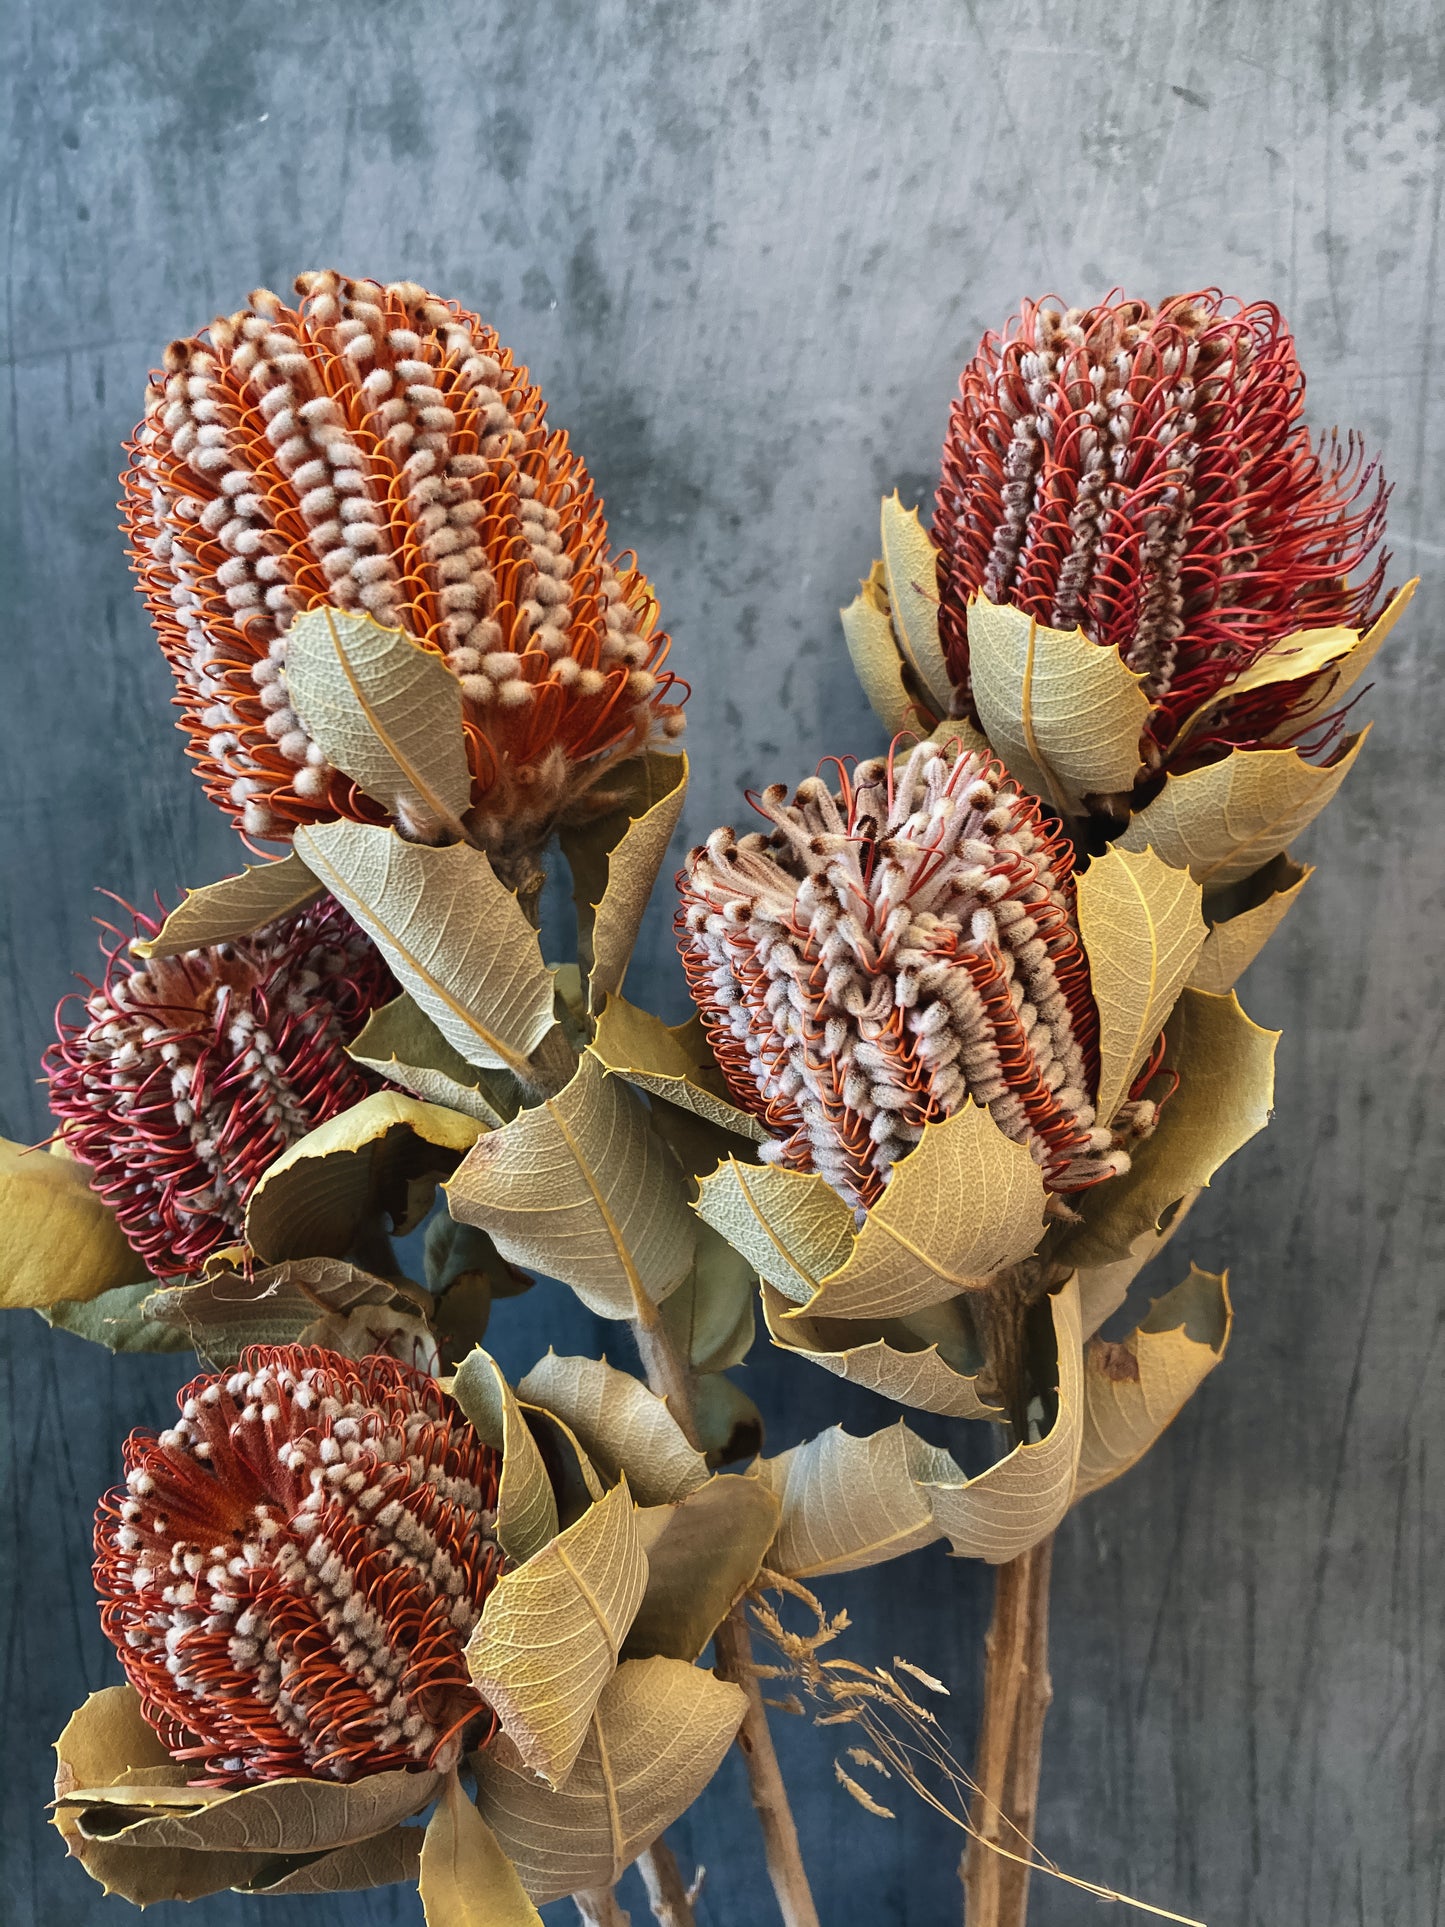 Dried banksia coccinea flowers